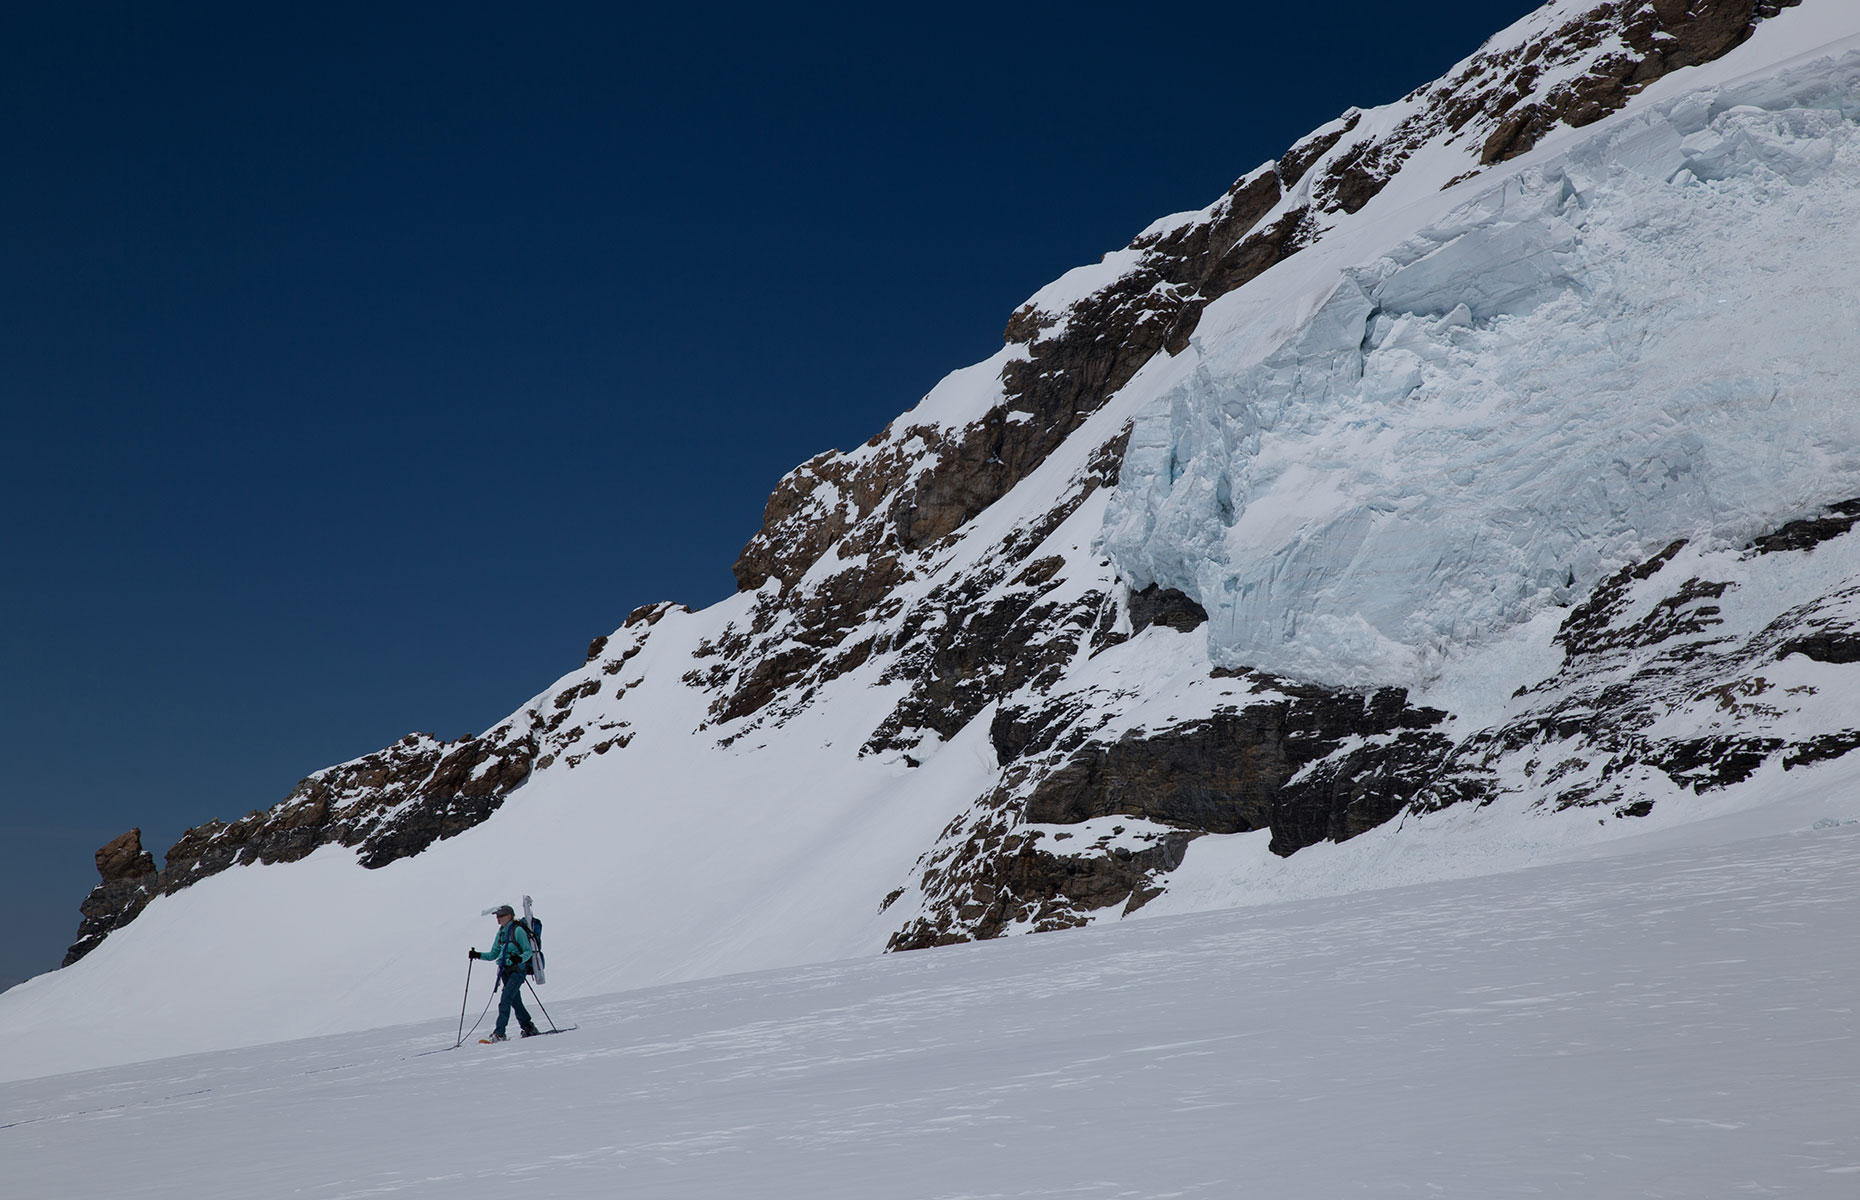 Snowshoeing in Jungfrau (Image: Chris_Hall/Shutterstock)